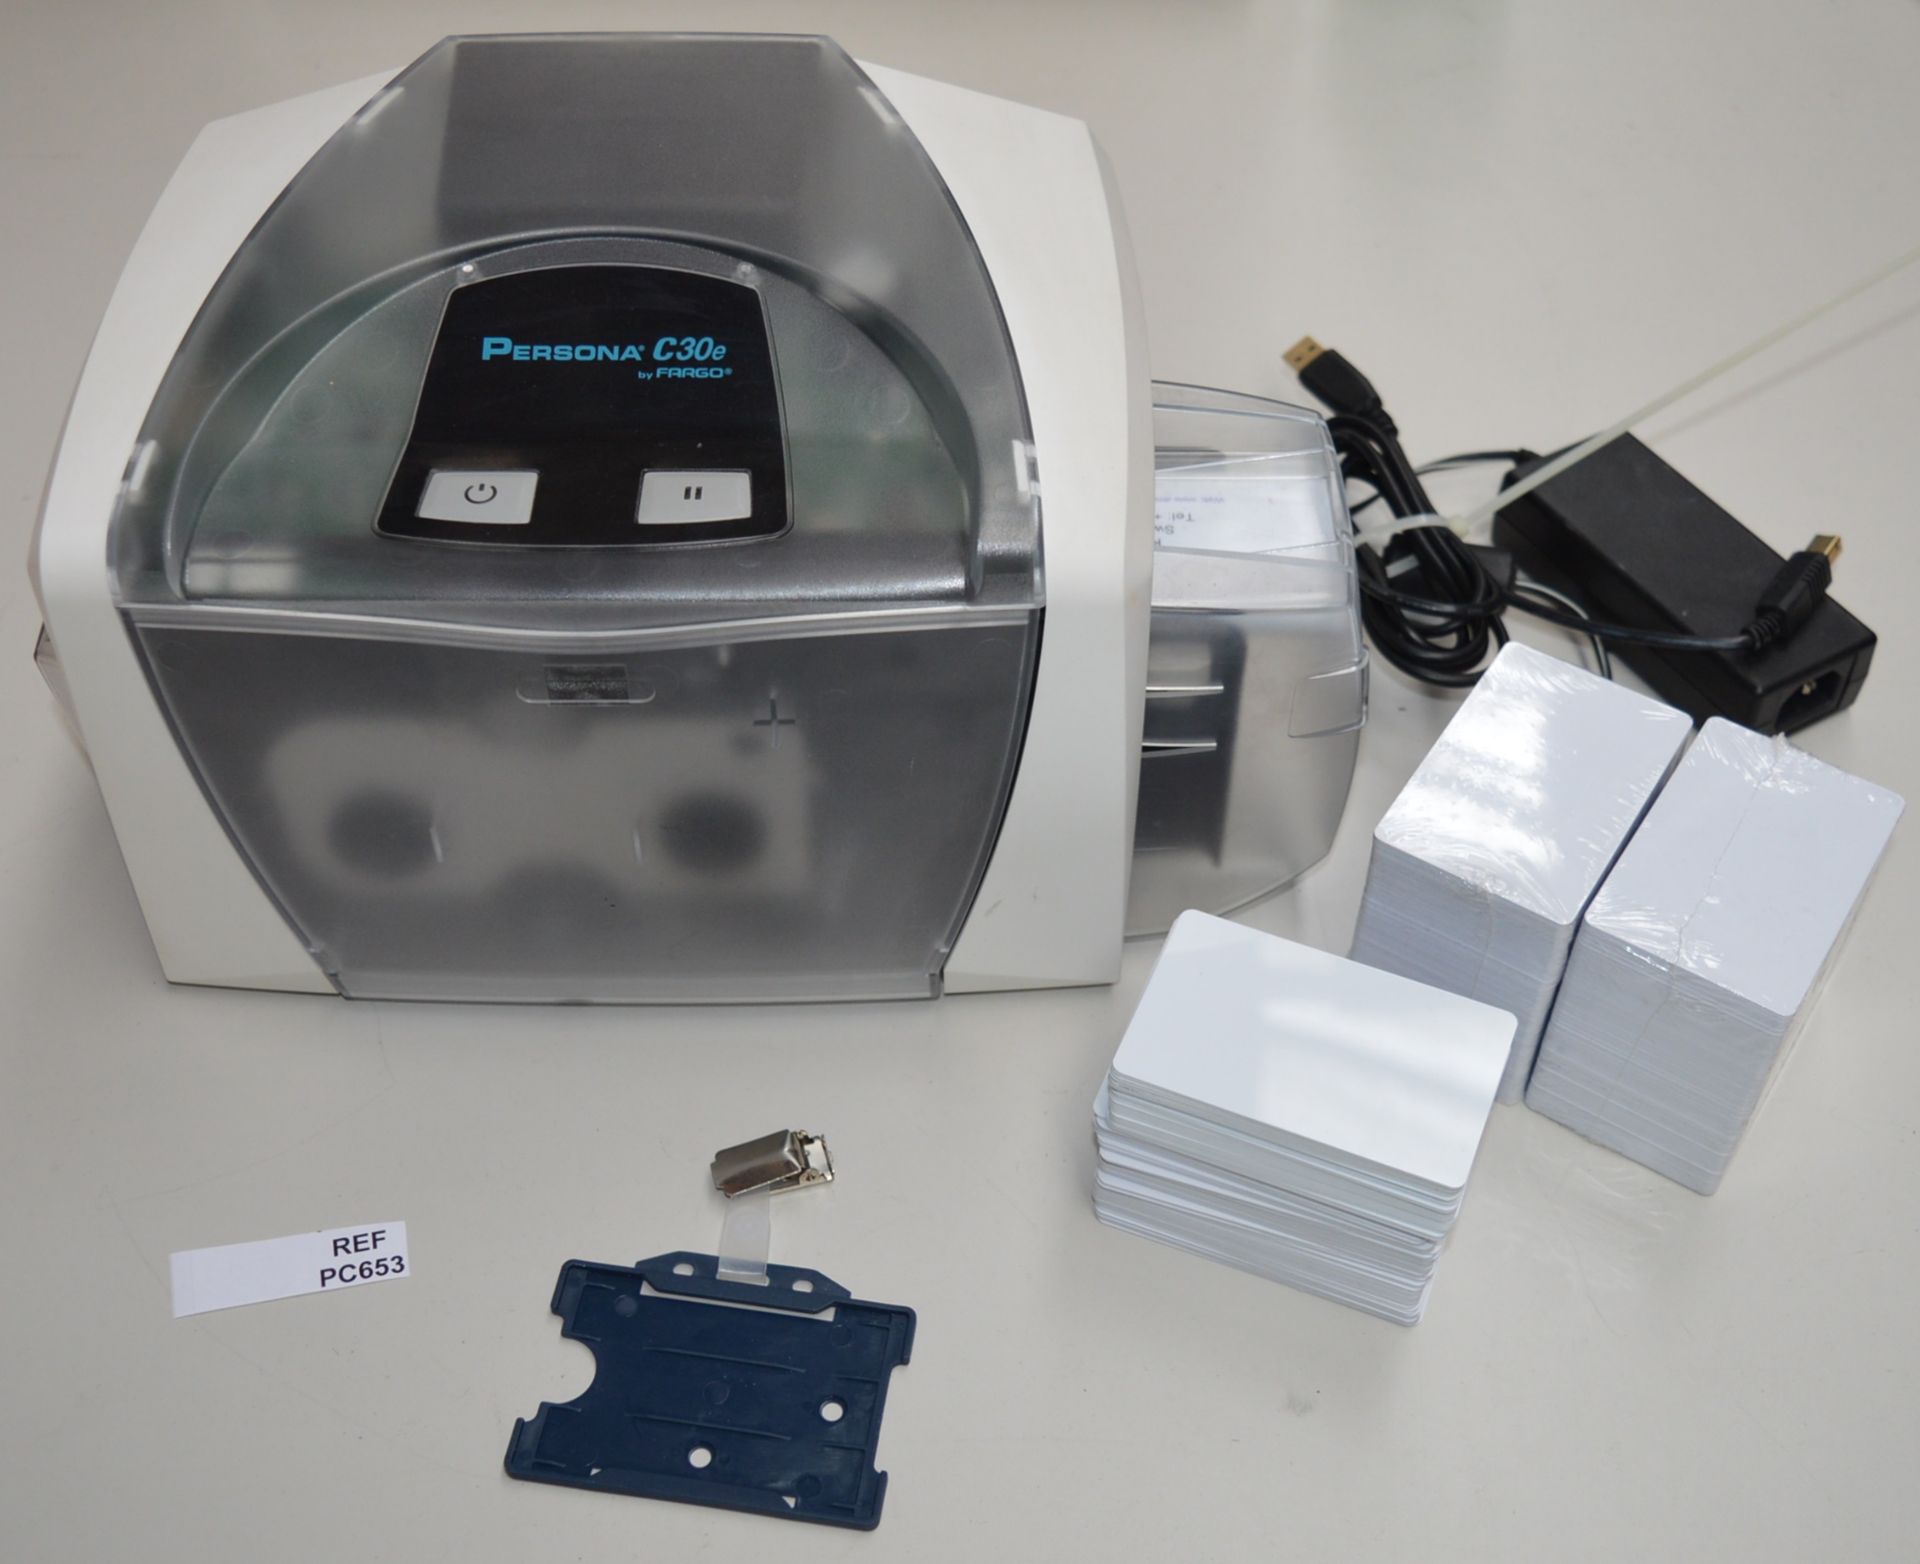 1 x Fargo Persona C30e Colour ID Card Printer - Includes Power Adaptor, Printer Lead and Blank ID